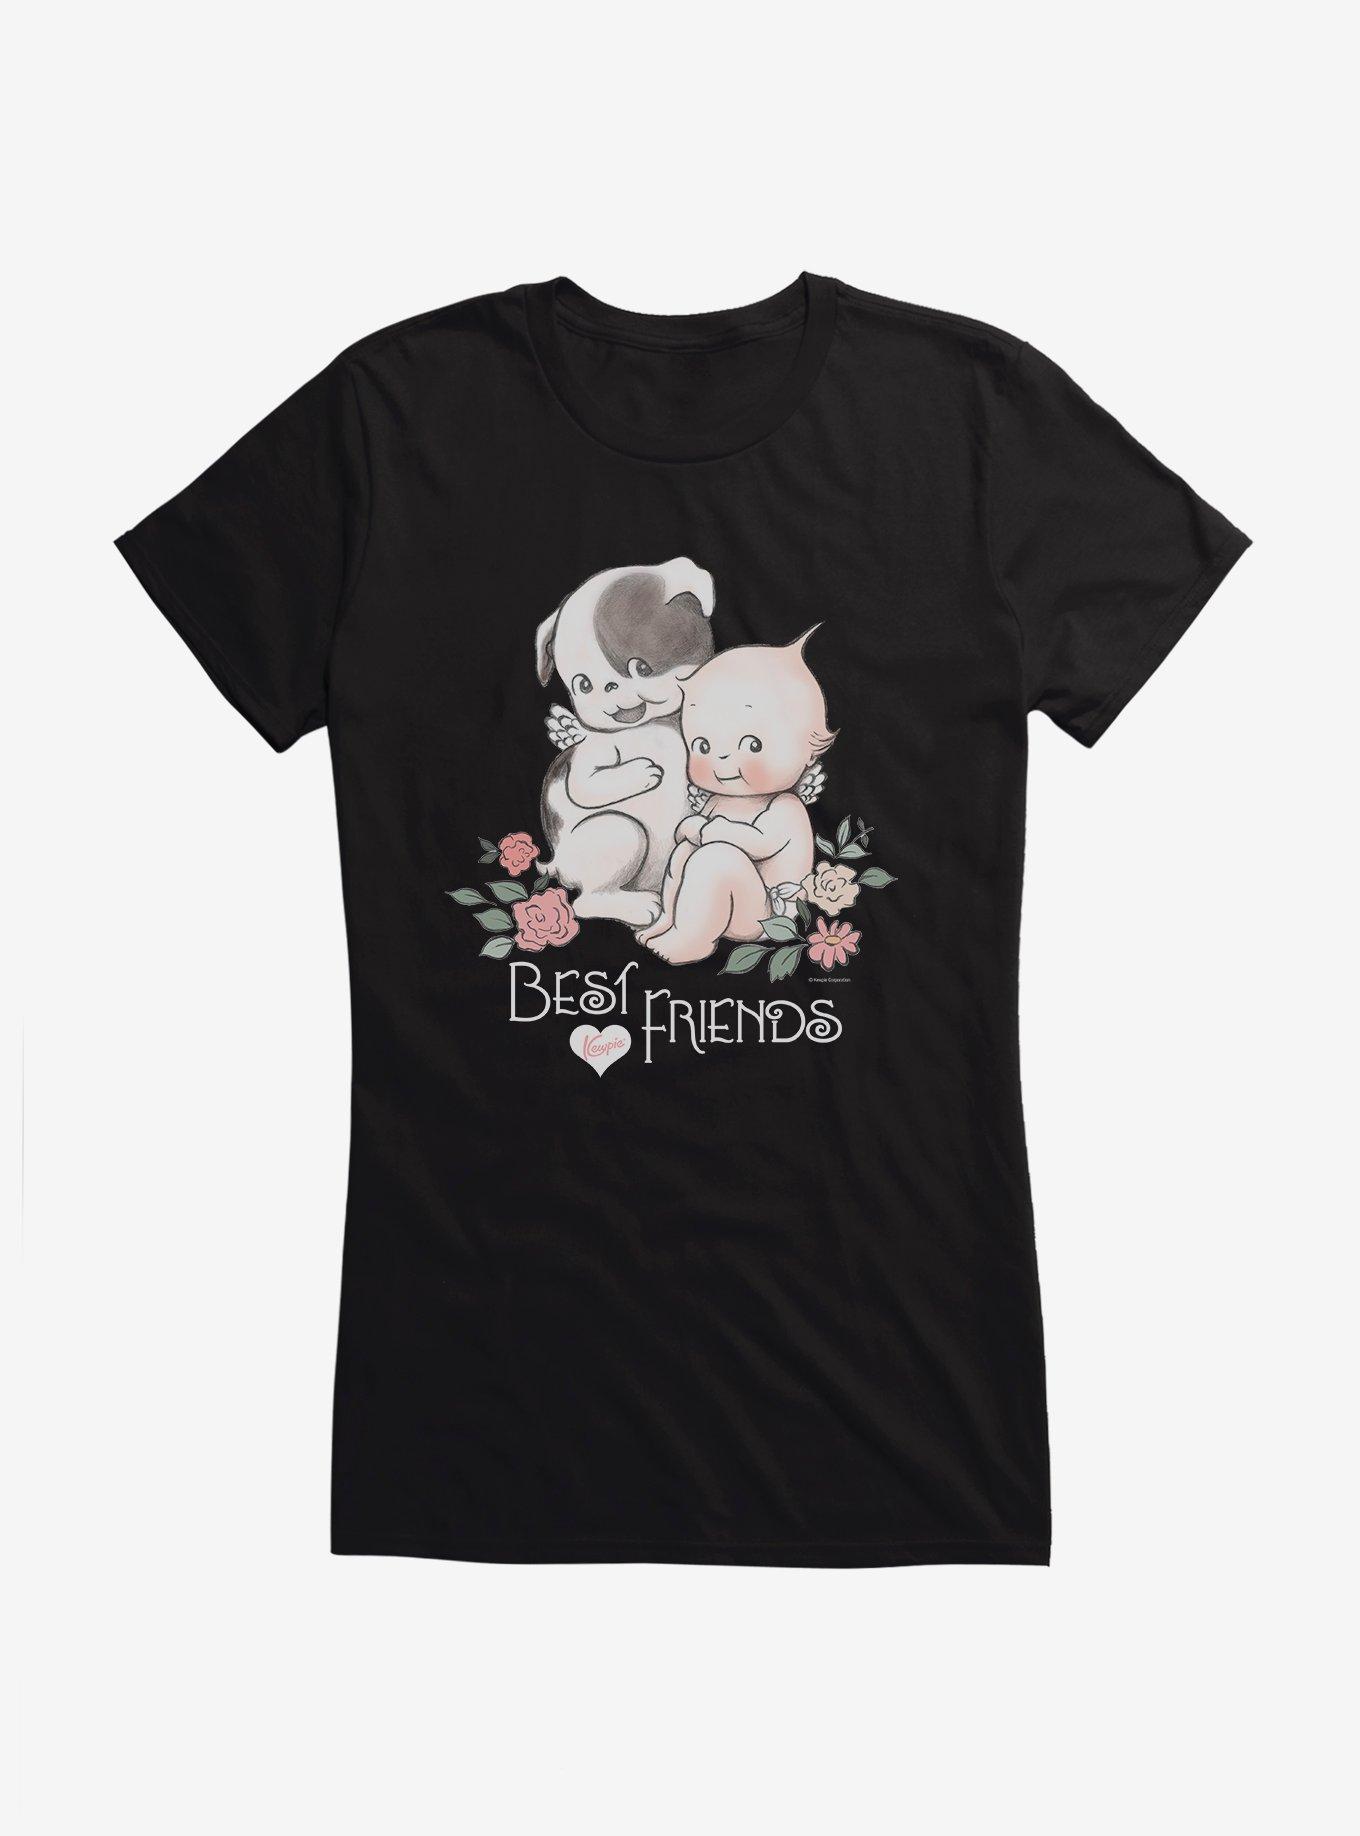 Kewpie Best Friends Girls T-Shirt